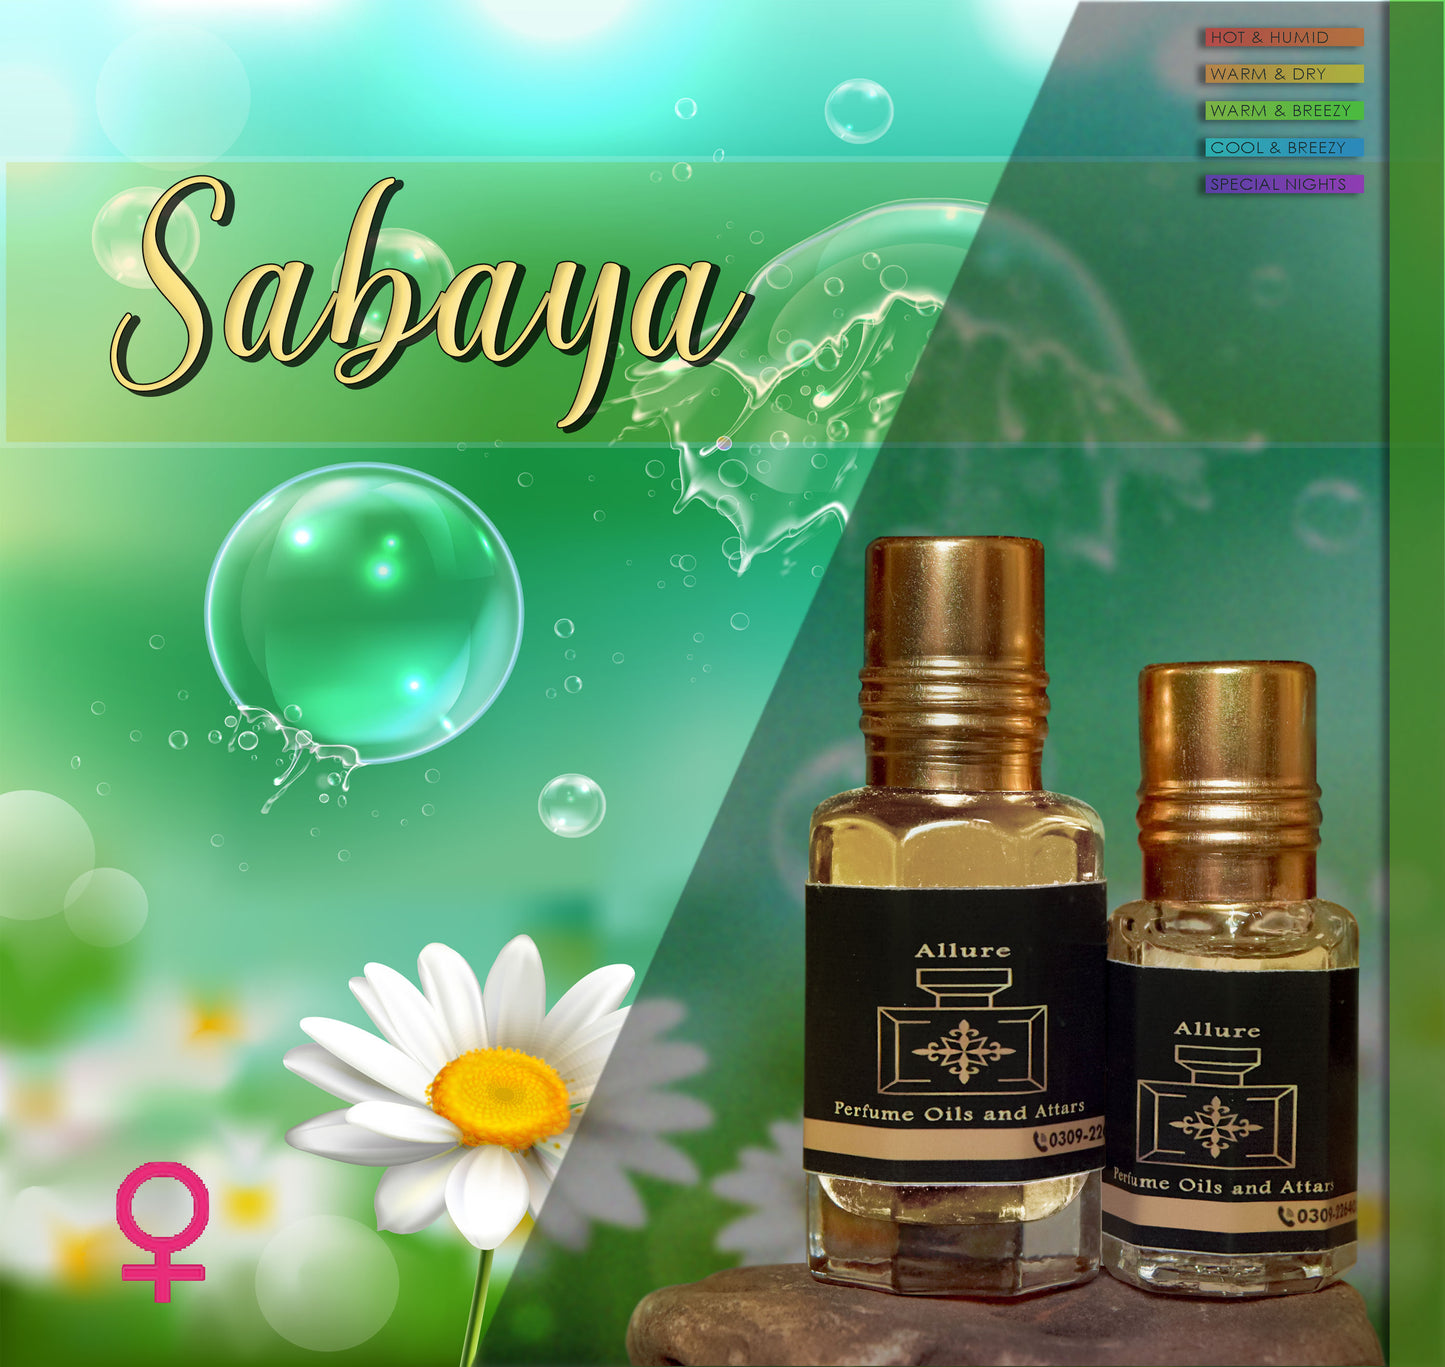 Sabaya (Mukhallat) Attar in high quality (Perfume Oil)